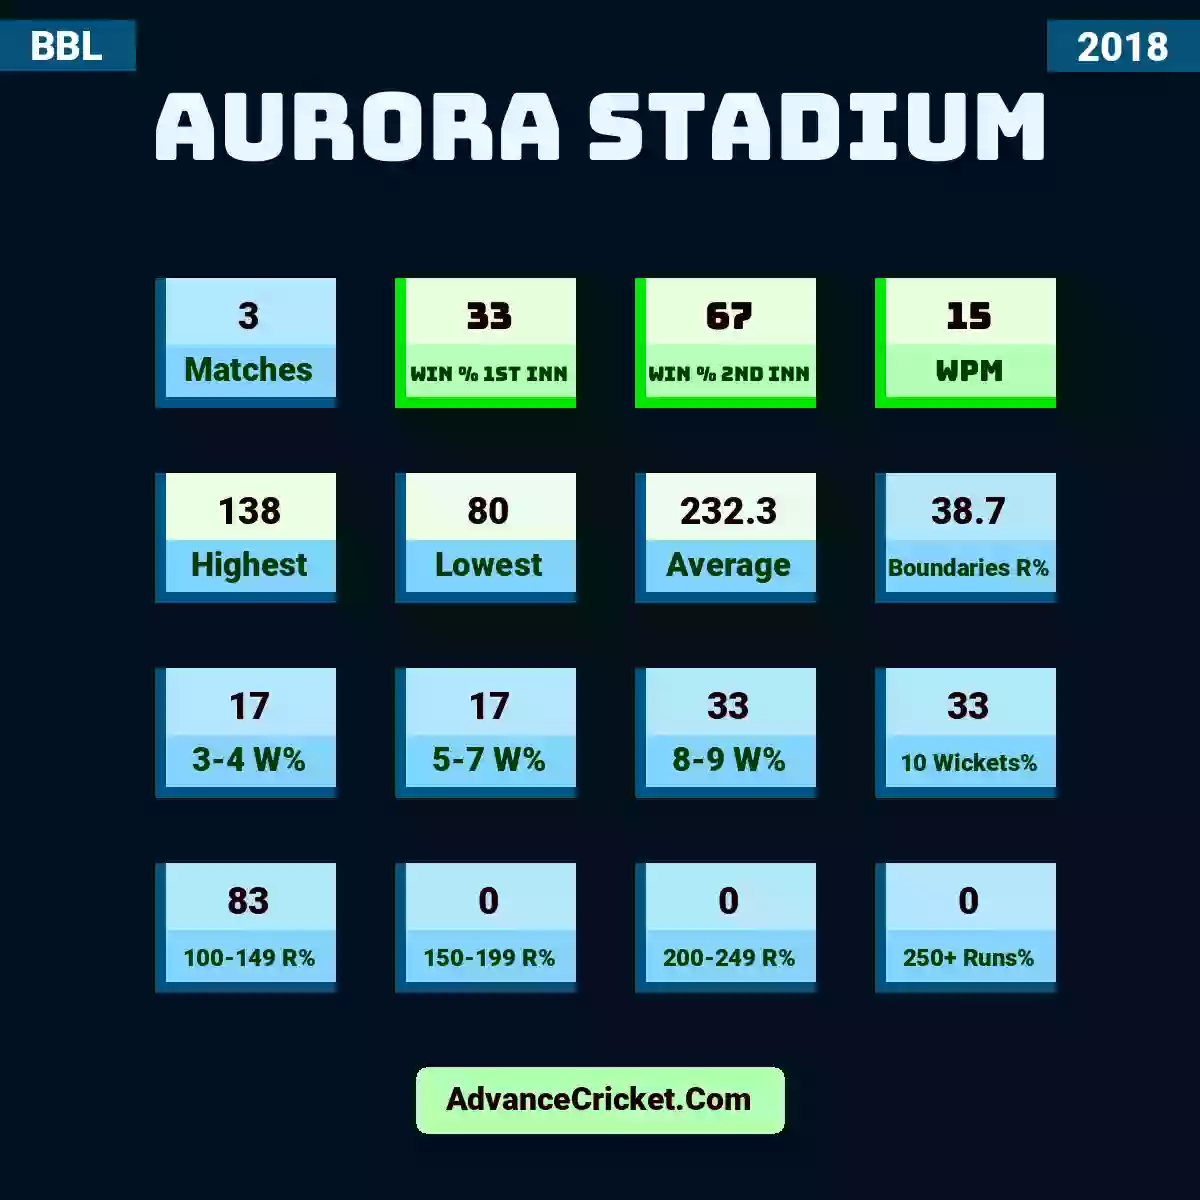 Image showing Aurora Stadium with Matches: 3, Win % 1st Inn: 33, Win % 2nd Inn: 67, WPM: 15, Highest: 138, Lowest: 80, Average: 232.3, Boundaries R%: 38.7, 3-4 W%: 17, 5-7 W%: 17, 8-9 W%: 33, 10 Wickets%: 33, 100-149 R%: 83, 150-199 R%: 0, 200-249 R%: 0, 250+ Runs%: 0.